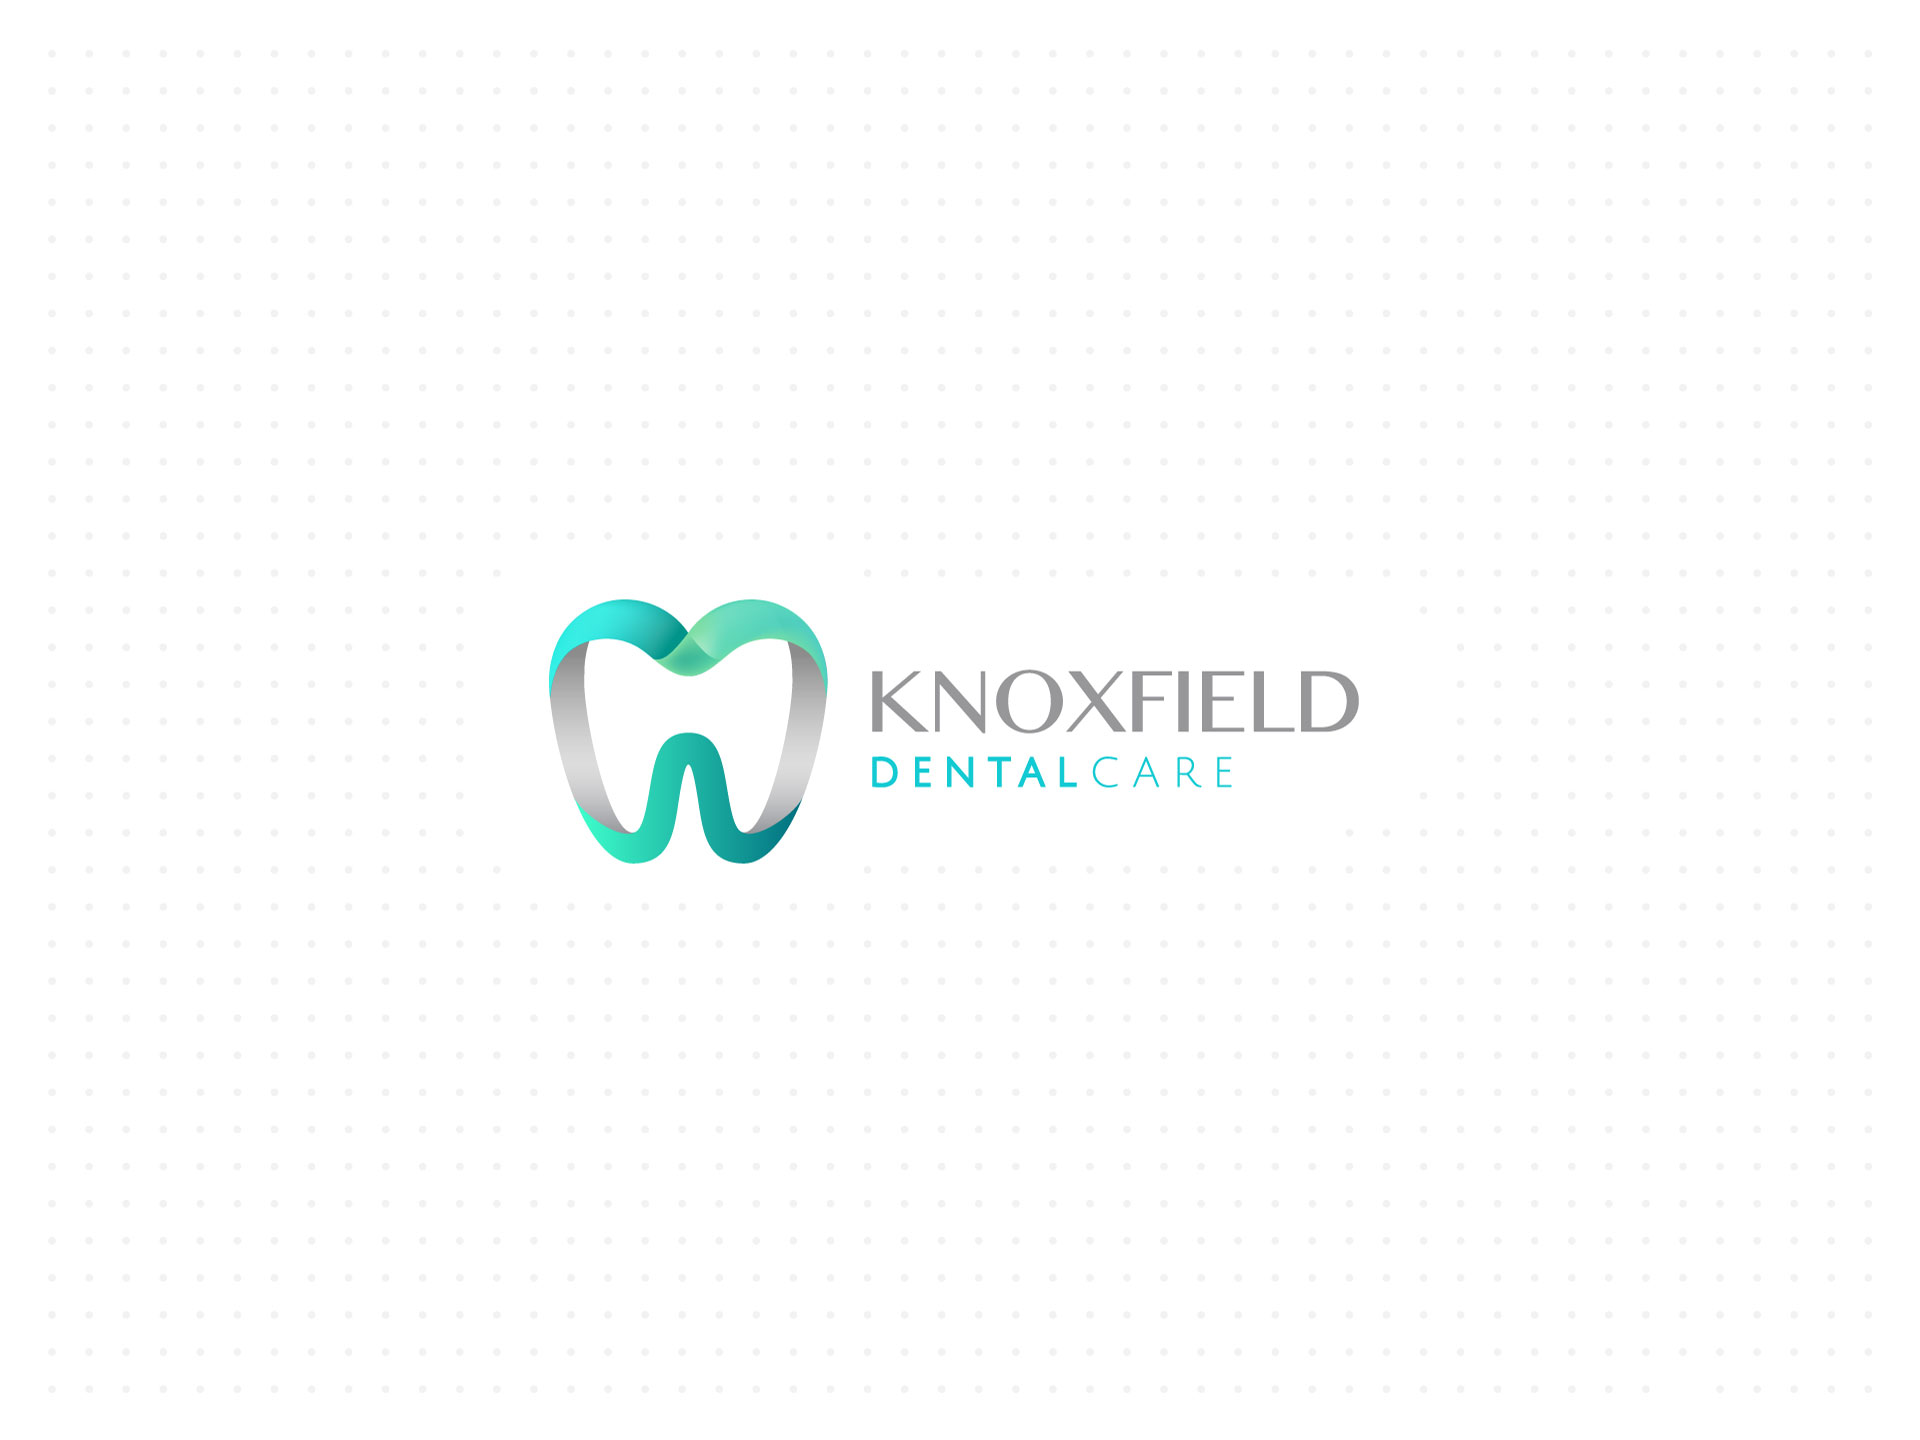 knoxfield dental medical branding by Z Creative Studio Branding & Graphic Design Melbourne